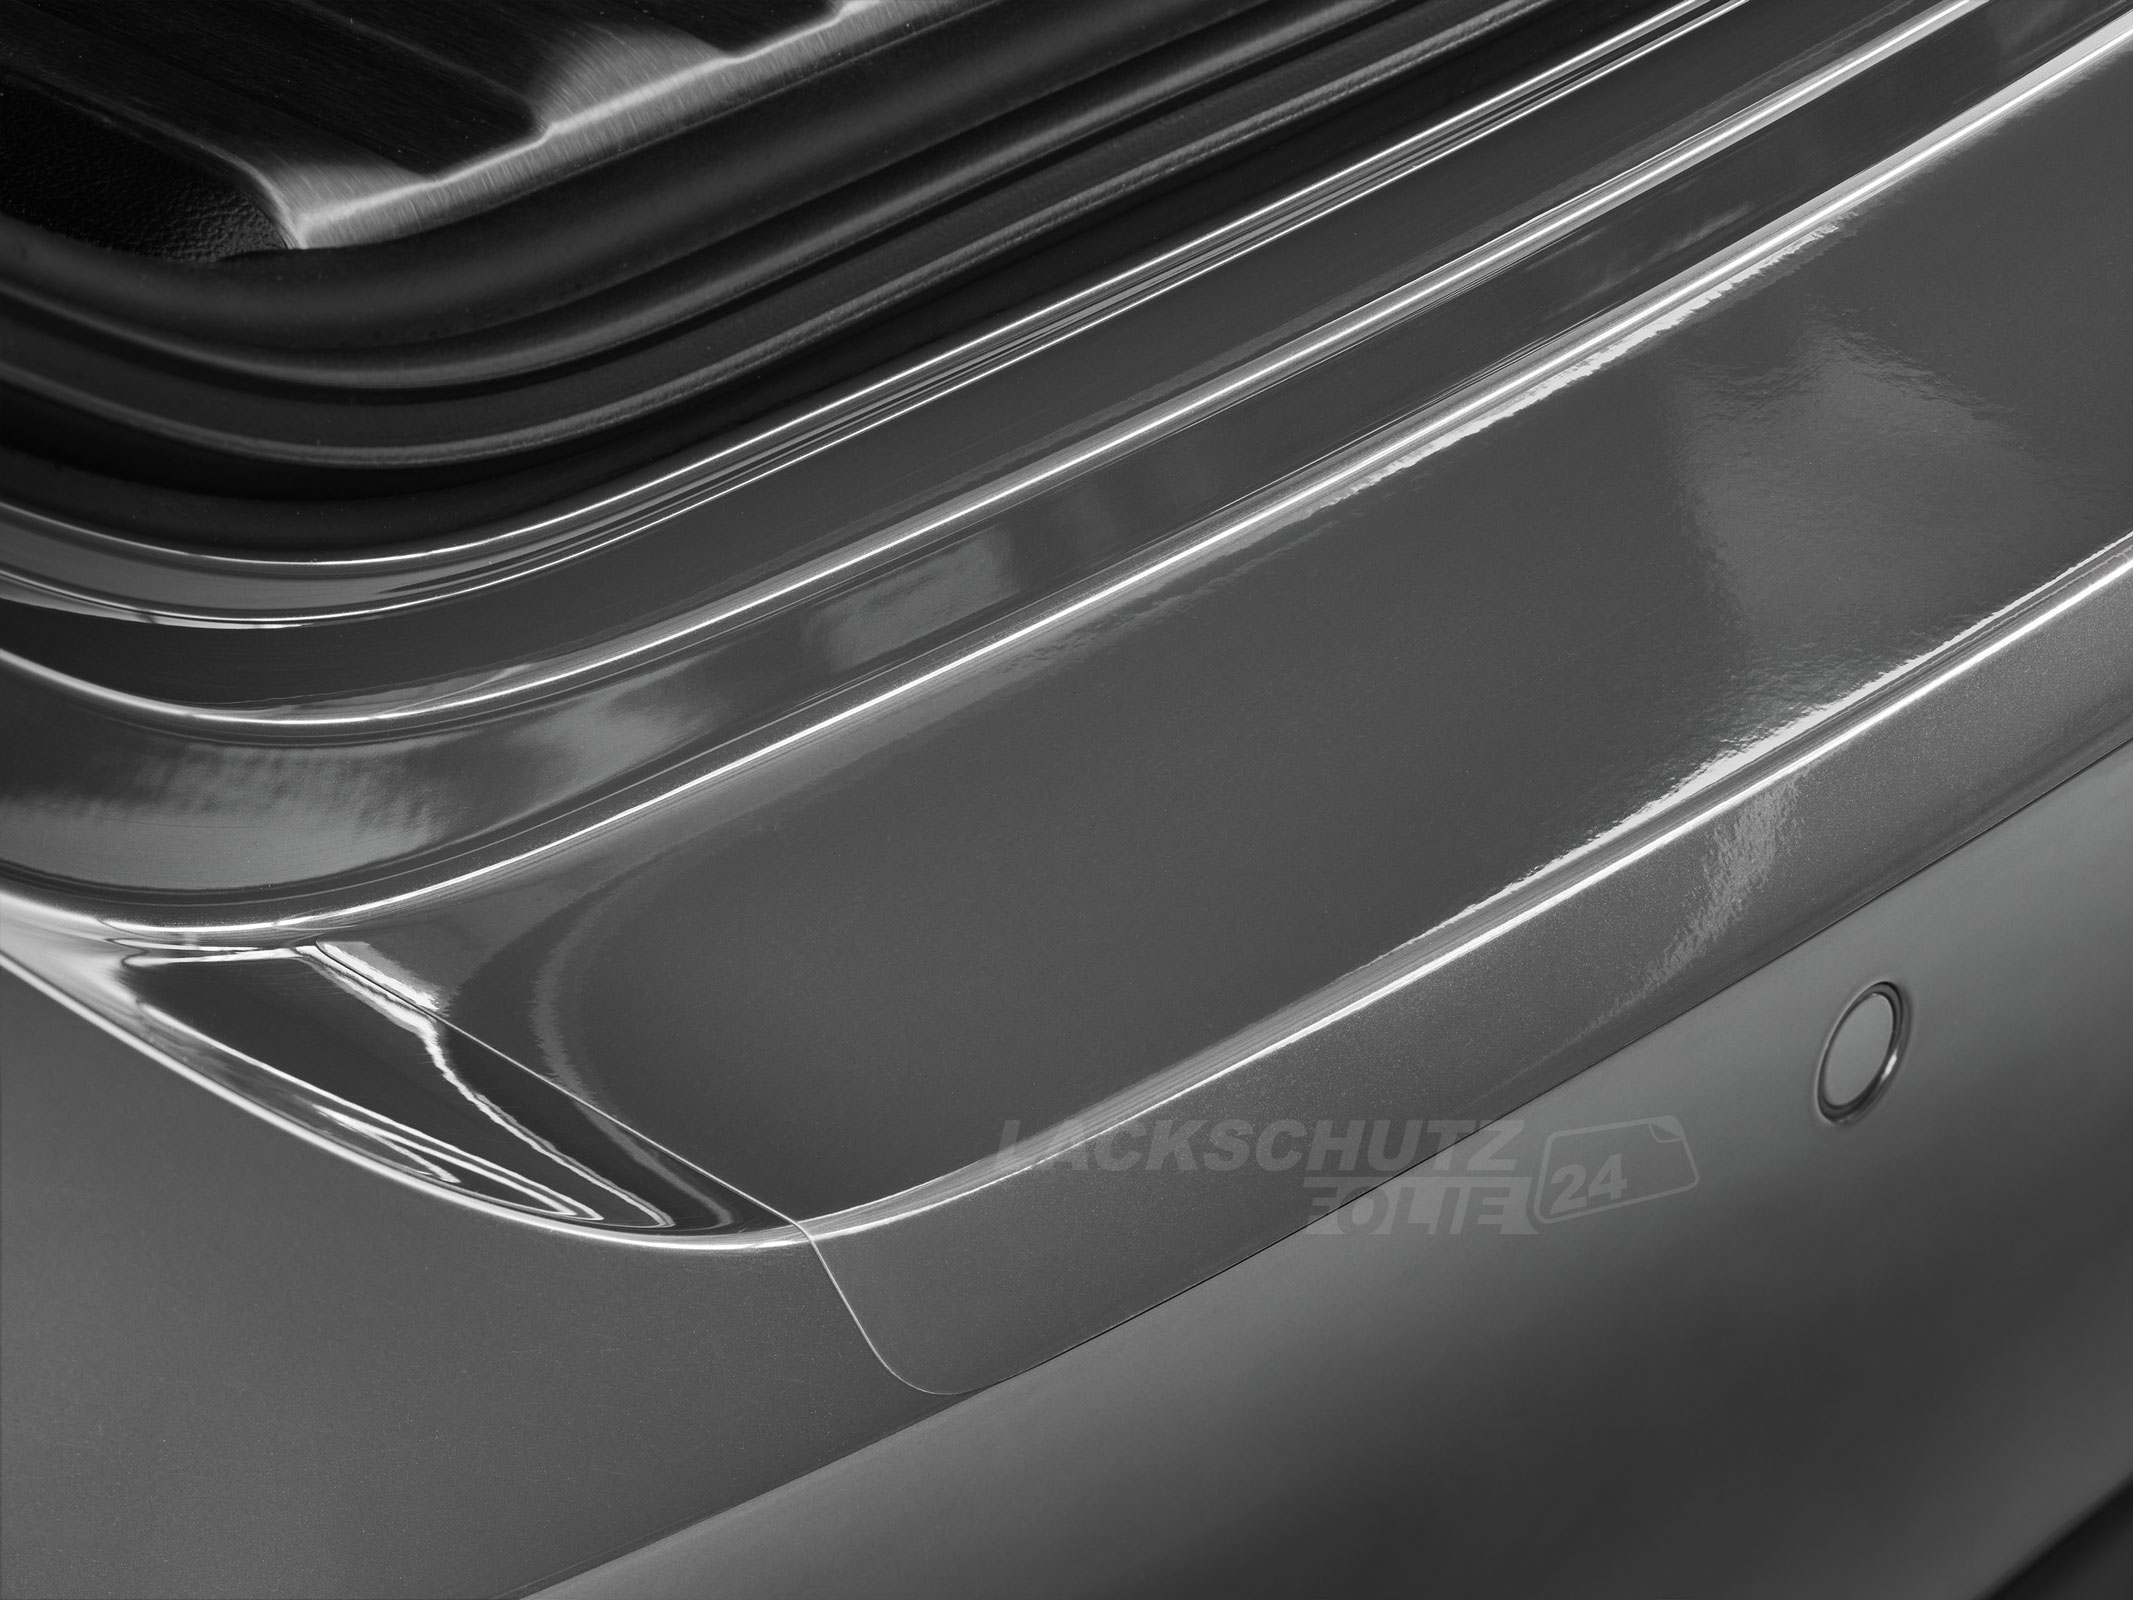 Ladekantenschutzfolie - Transparent Glatt Hochglänzend für Mazda 6 Sport-Kombi (III) Typ GL, ab BJ 10/2012 + Facelift